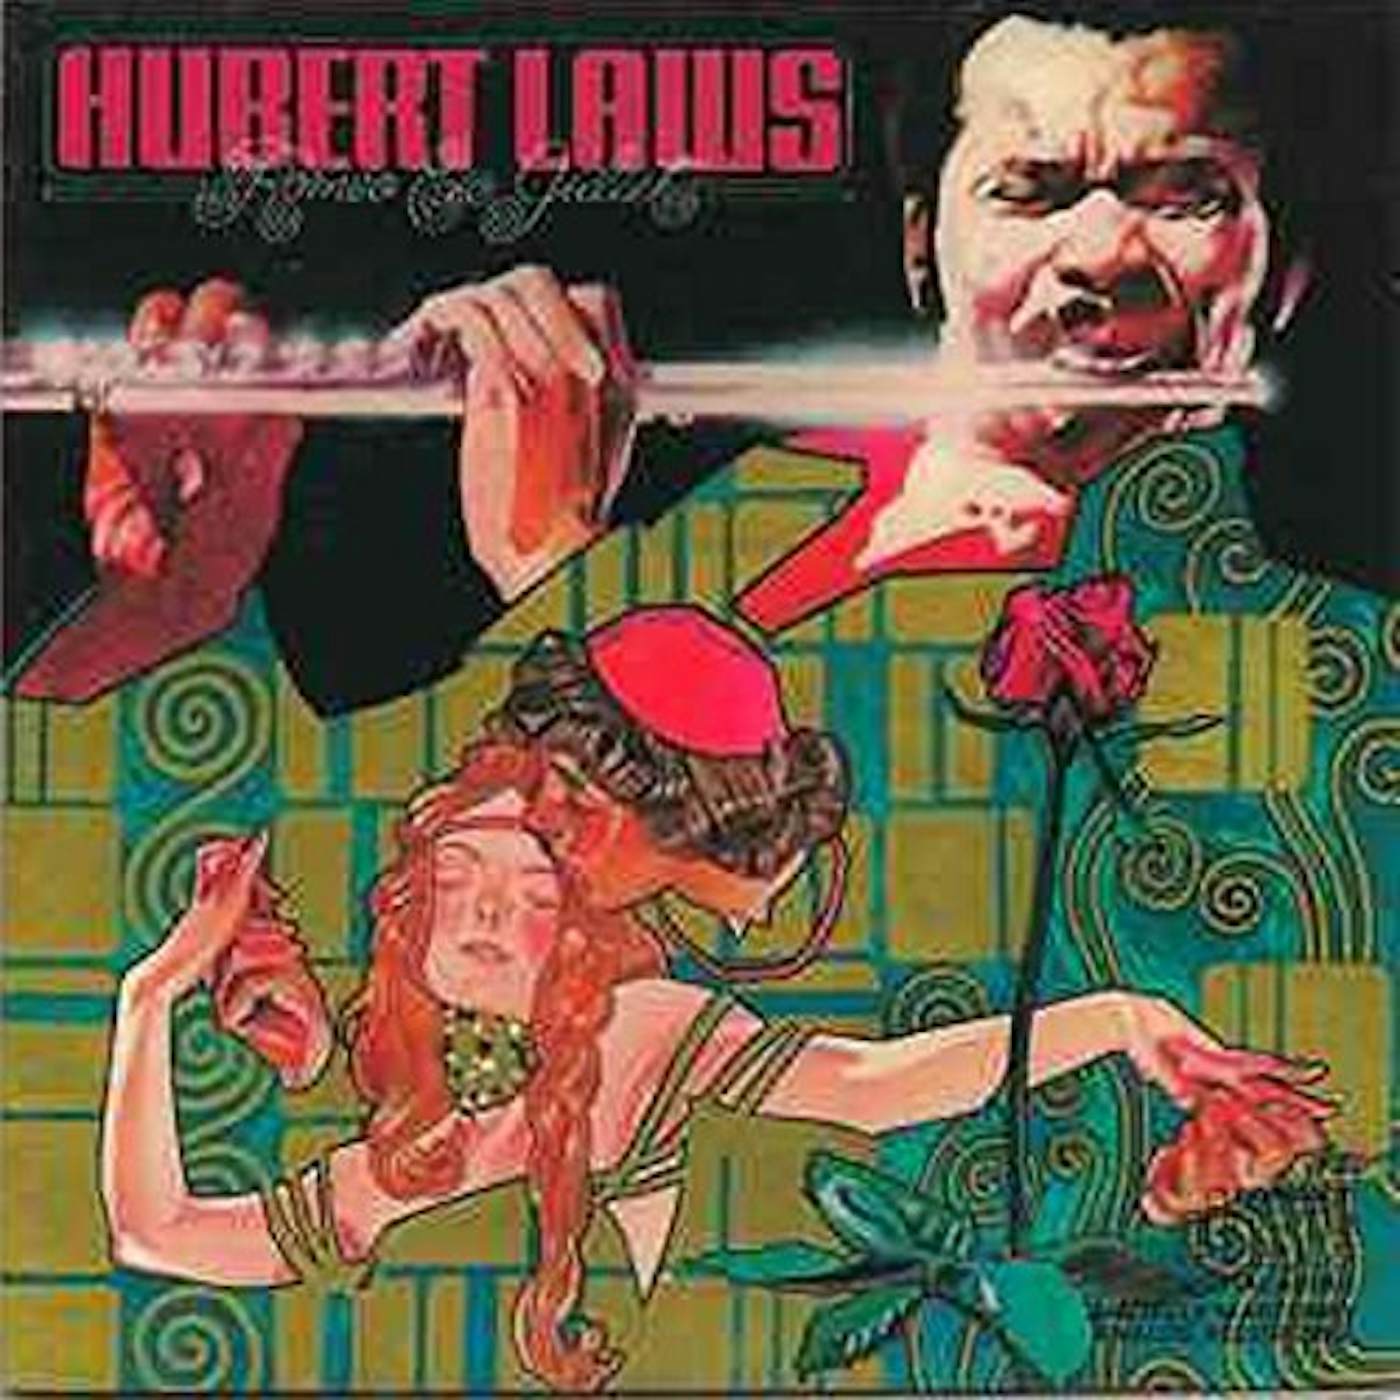 Hubert Laws ROMEO & JULIET CD